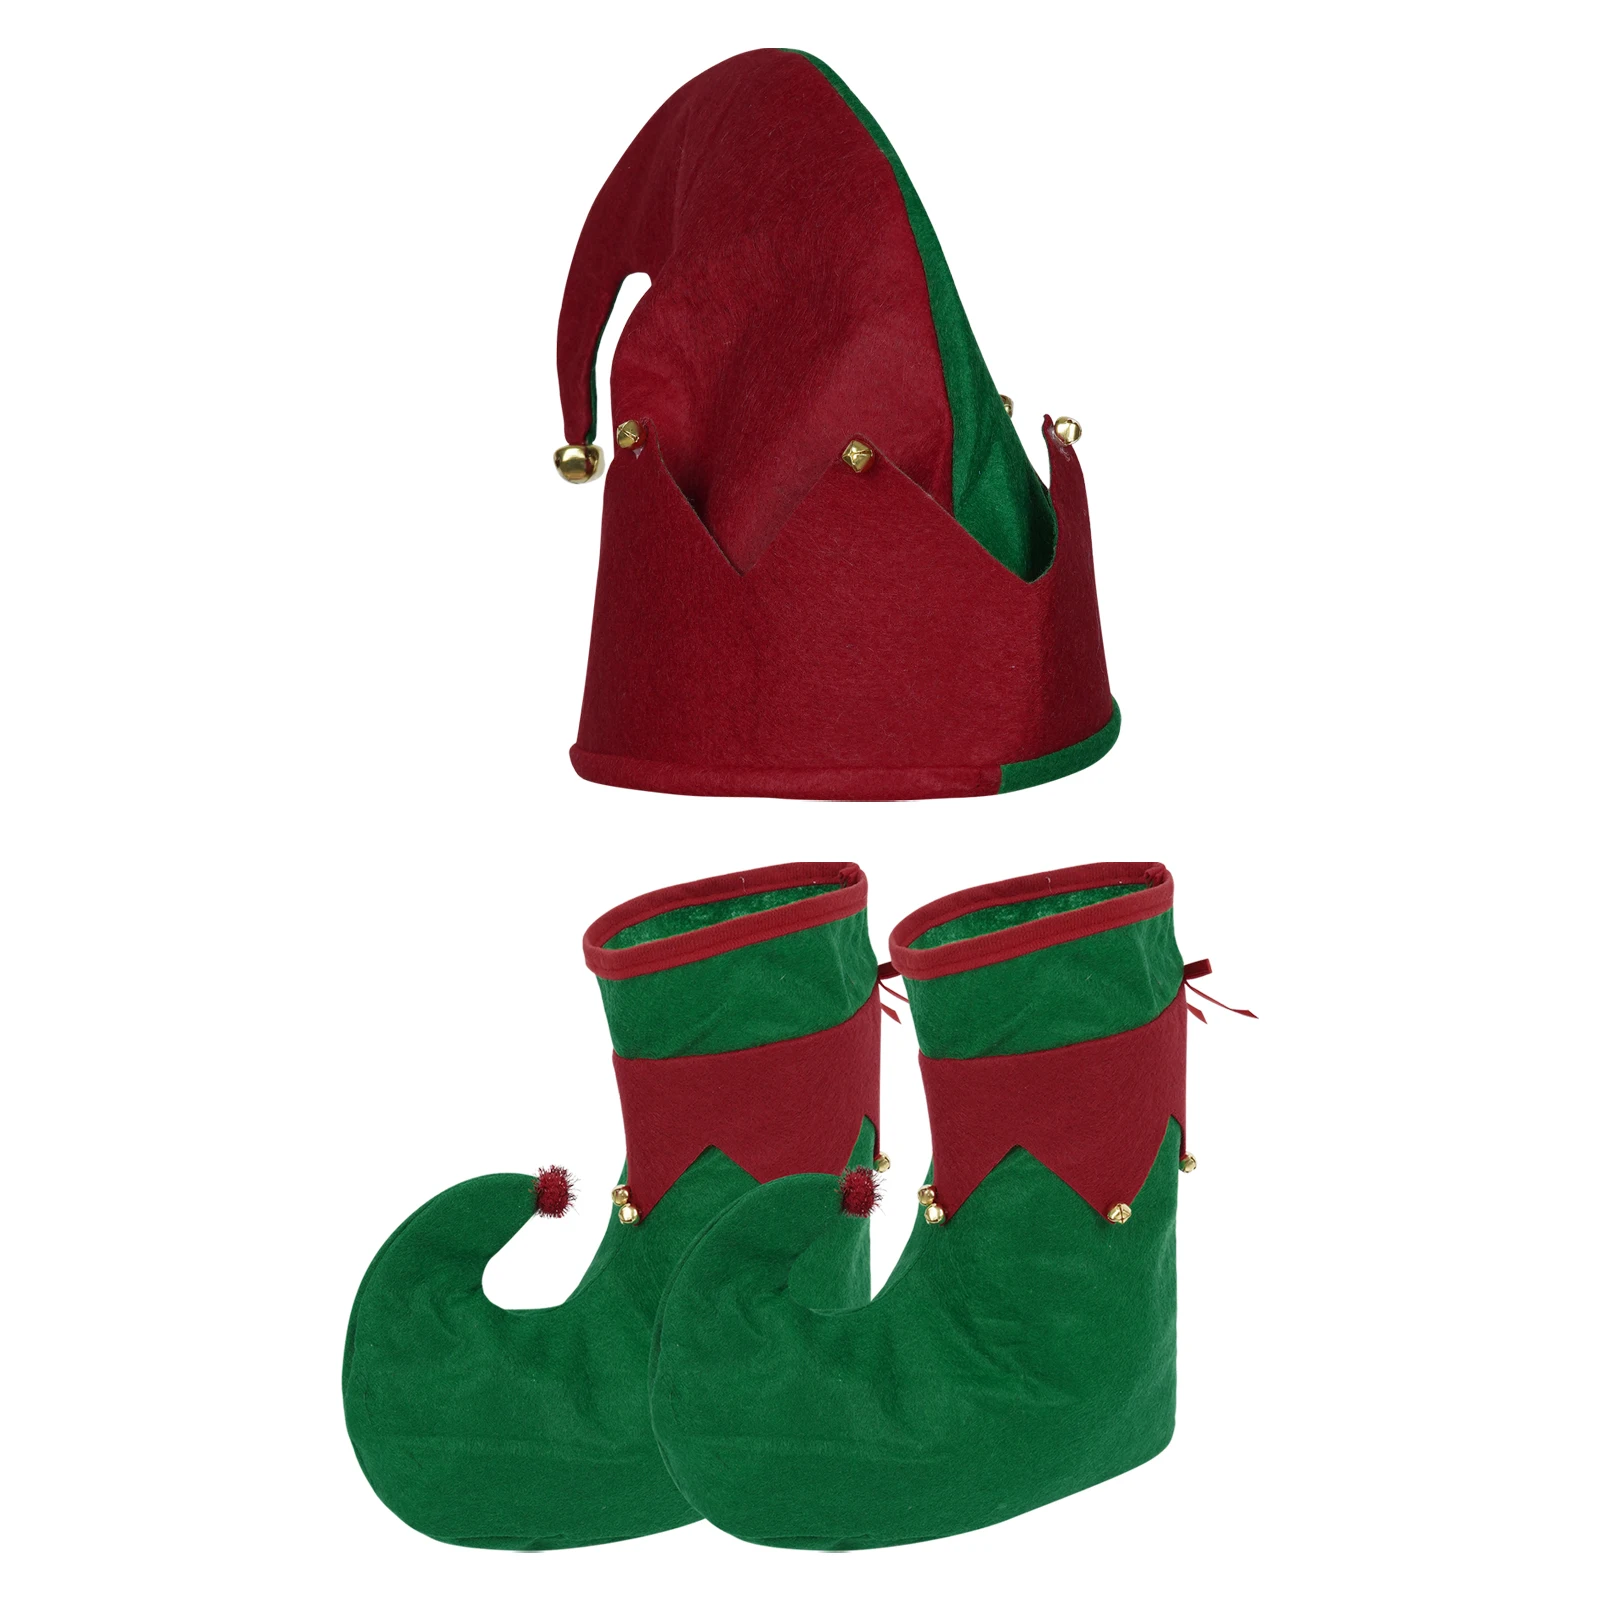 Unisex Adult Kids Christmas Elf Hat Cloth Cap Christmas Party Hat 